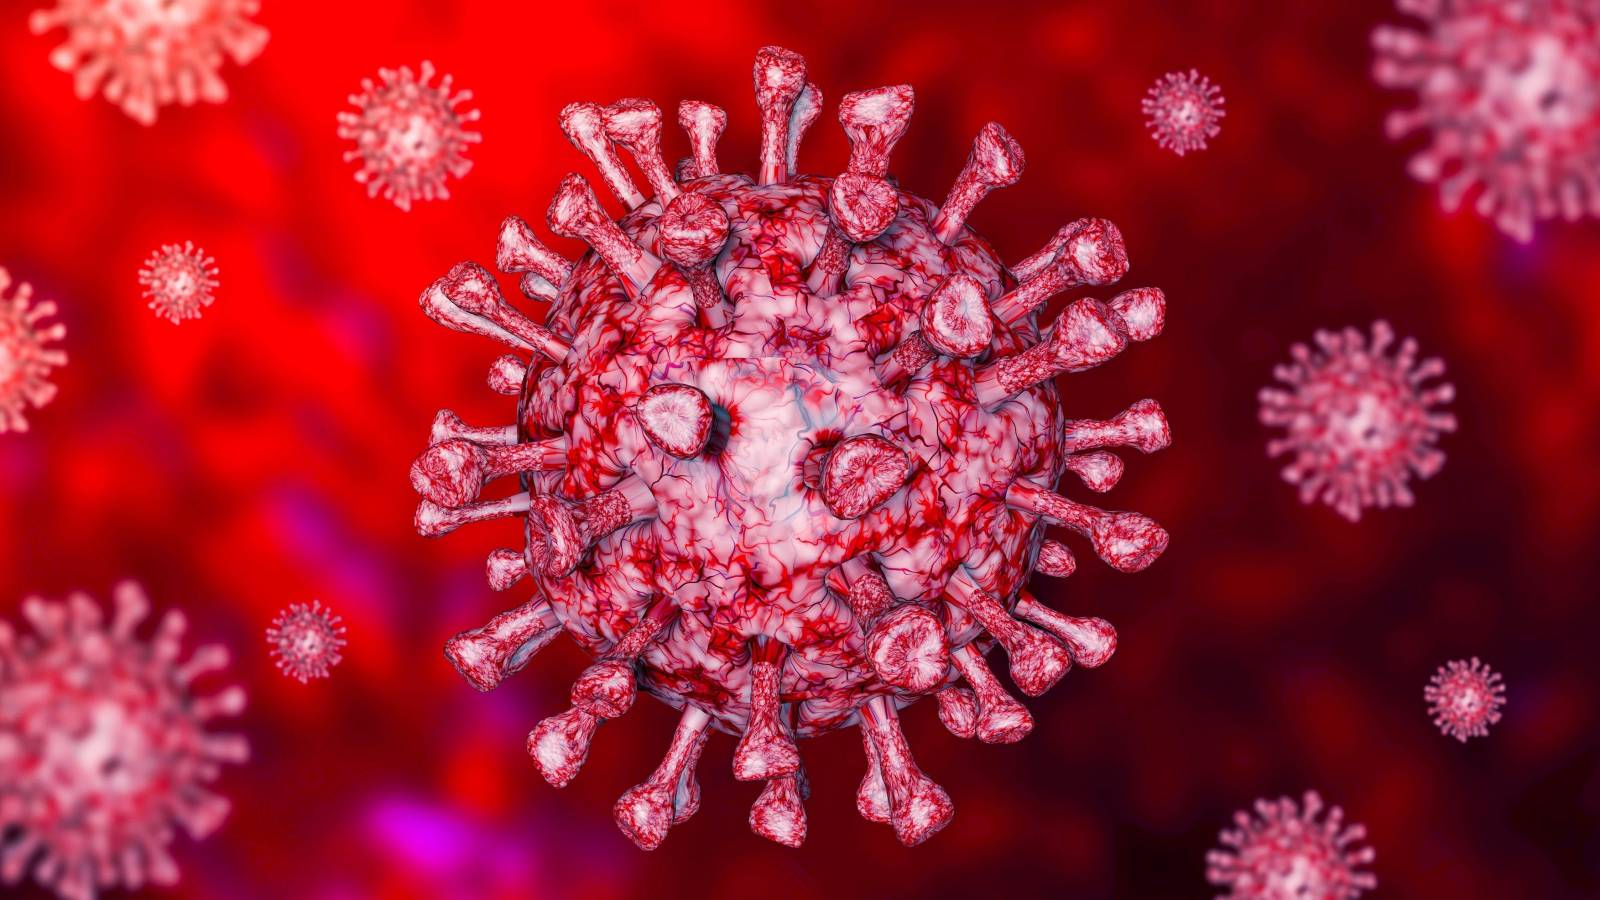 Coronavirus iført maske kuldioxidakkumulering